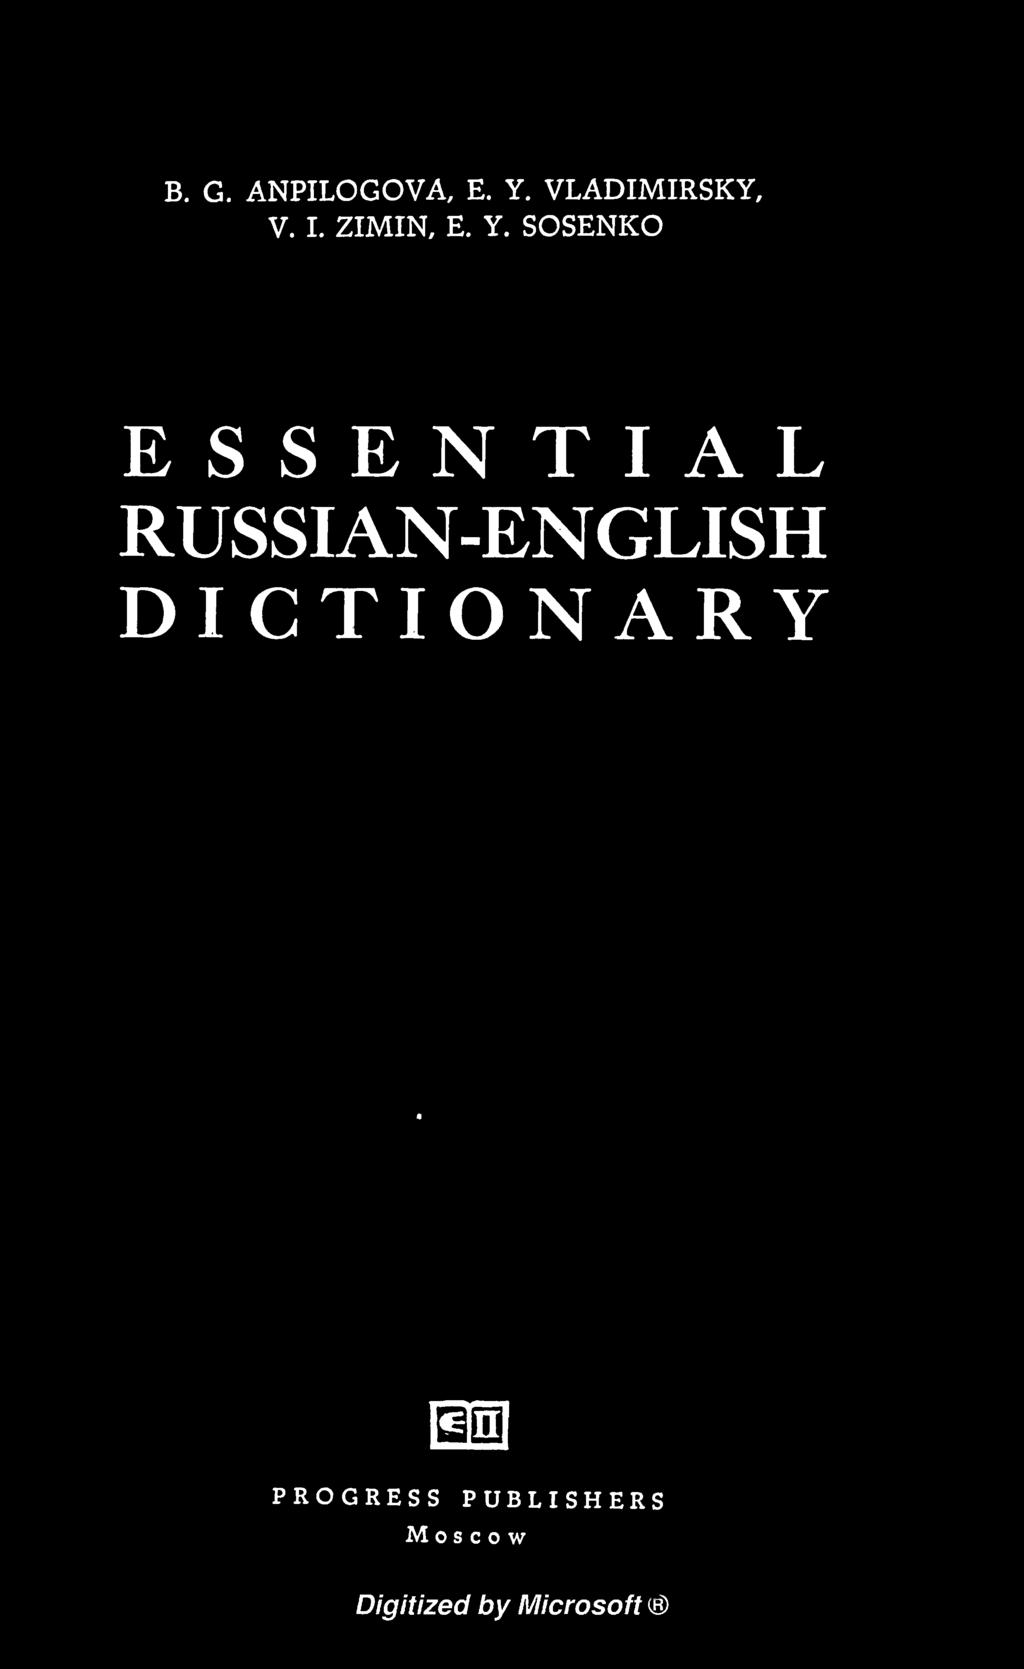 RUSSIAN-ENGLISH